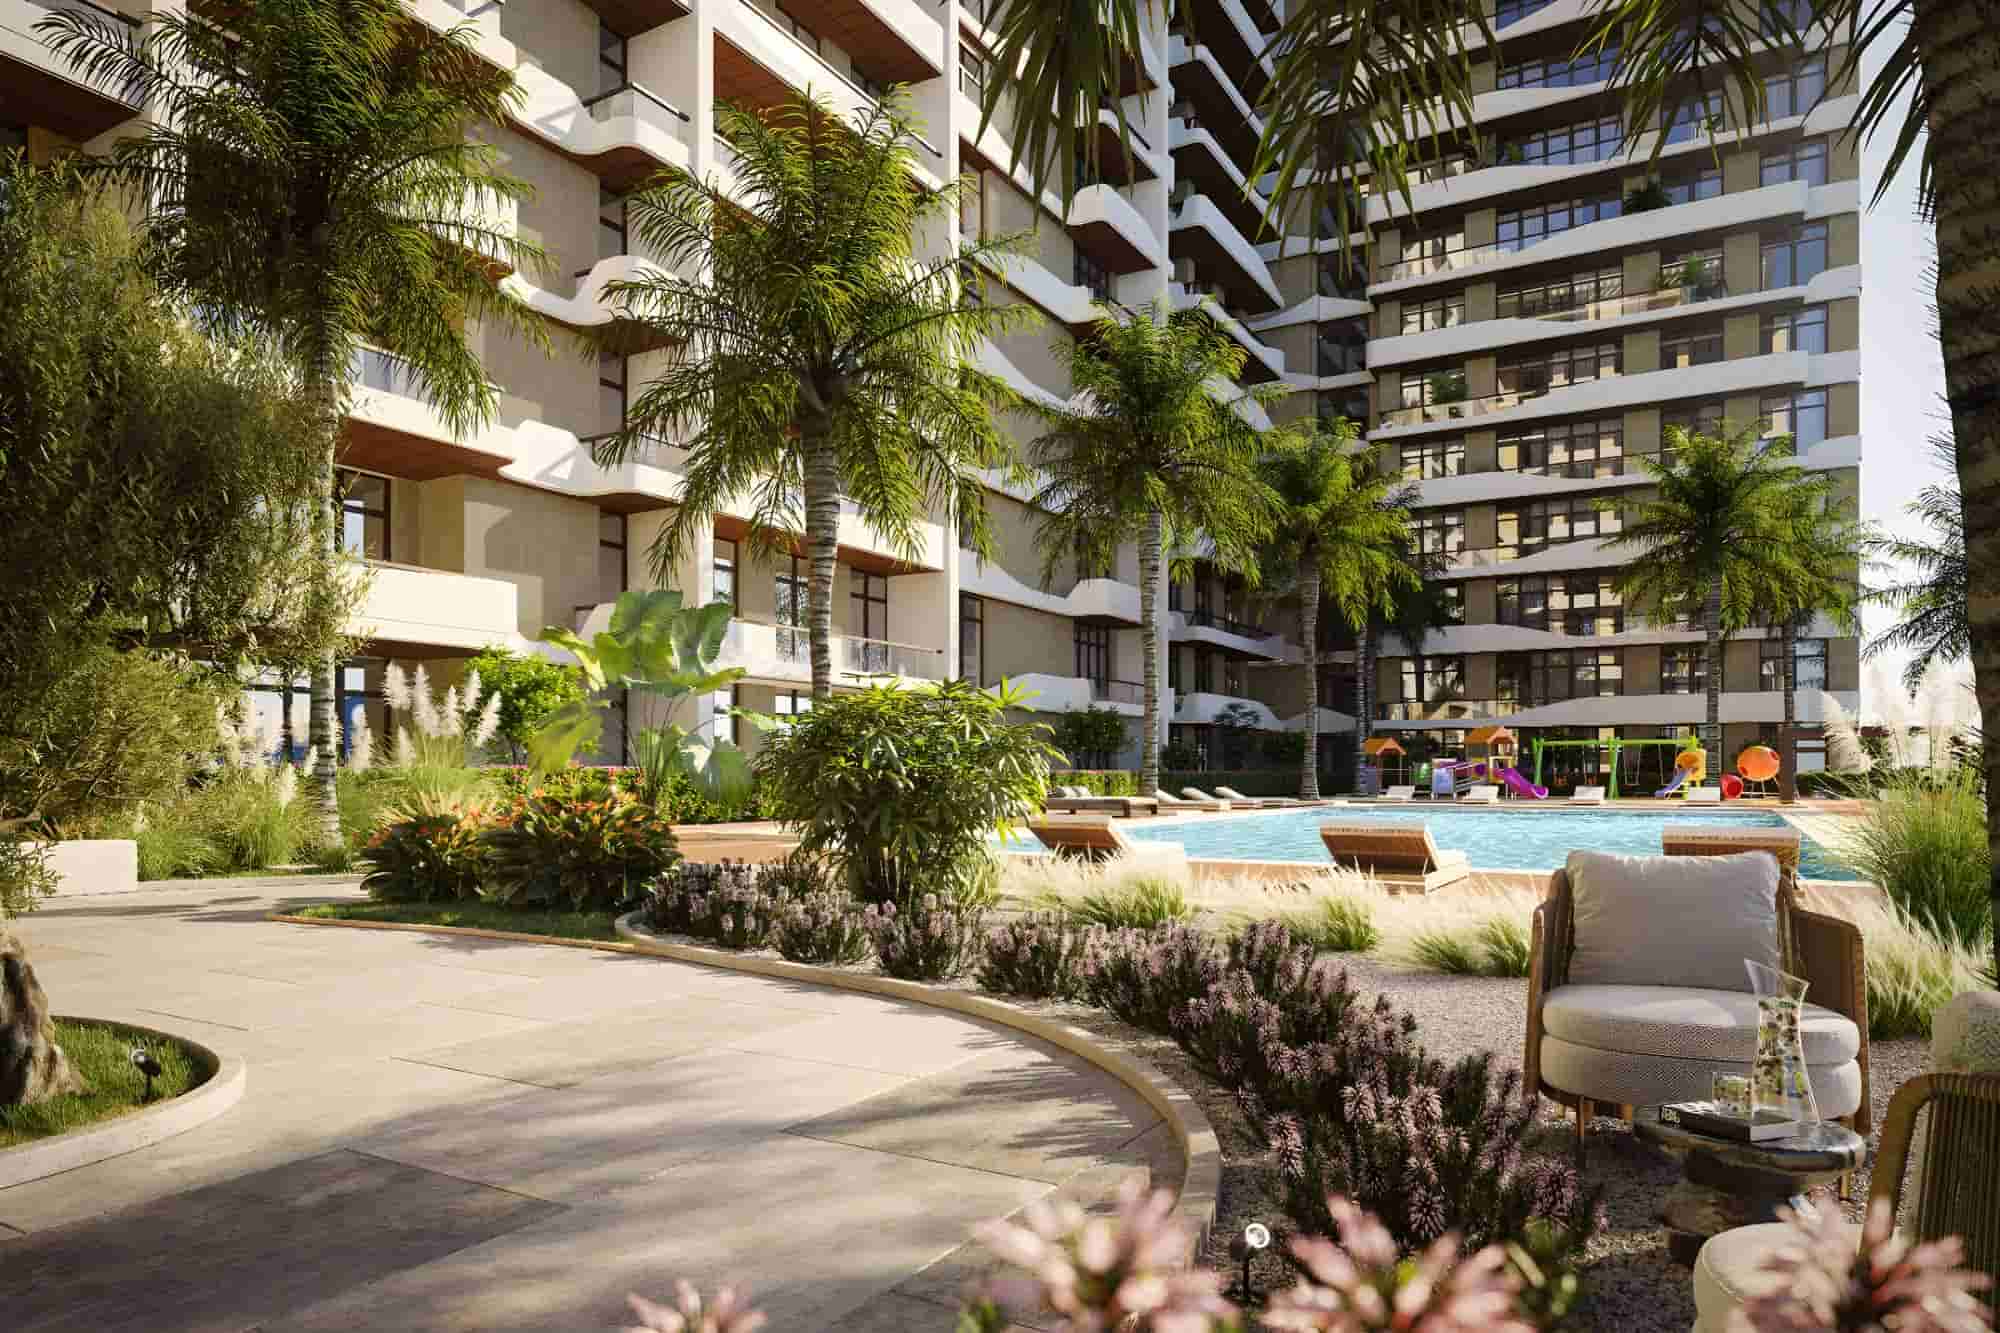 Helvetia Residences at Jumeirah Village Circle(JVC) by DHG Properties